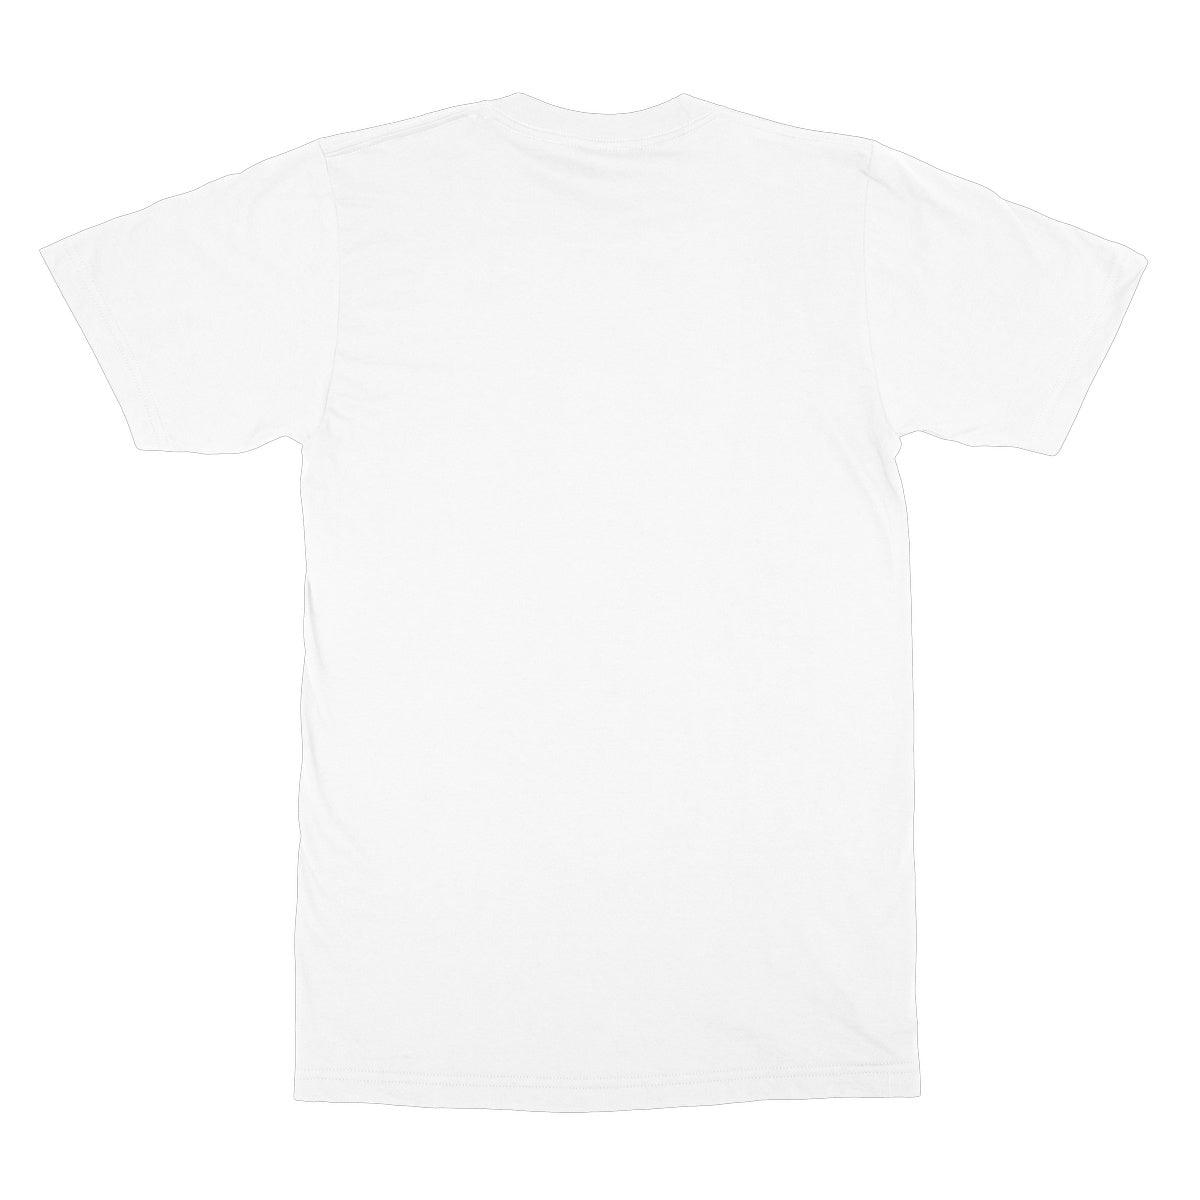 Men's Stag Do Graphic T-Shirt "Stag Squad" antler print - White - Bavari Shop - Bavarian Outfits, Dirndl, Lederhosen & Accessories